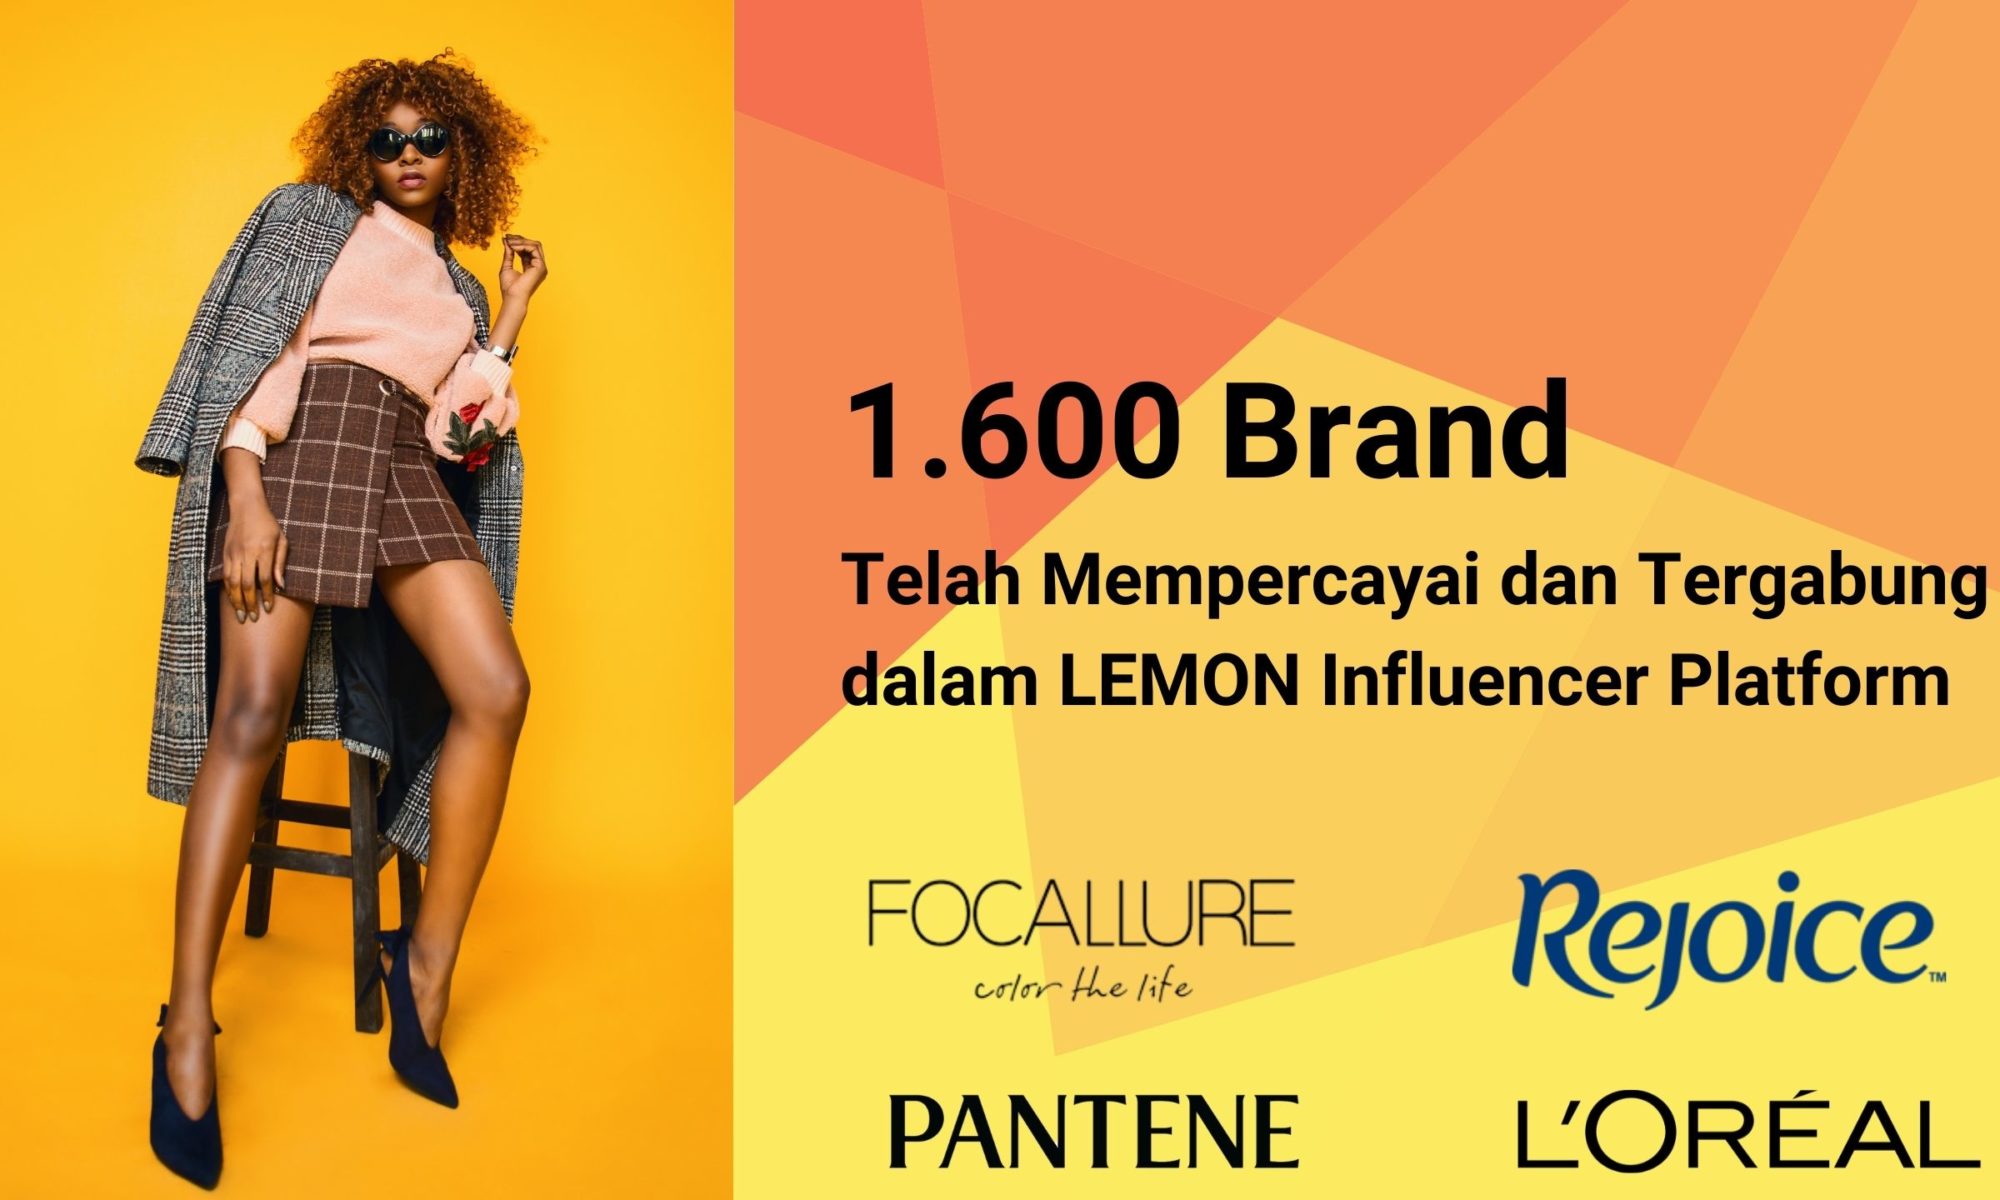 1600 brand percaya dengan LEMON Influencer Platform